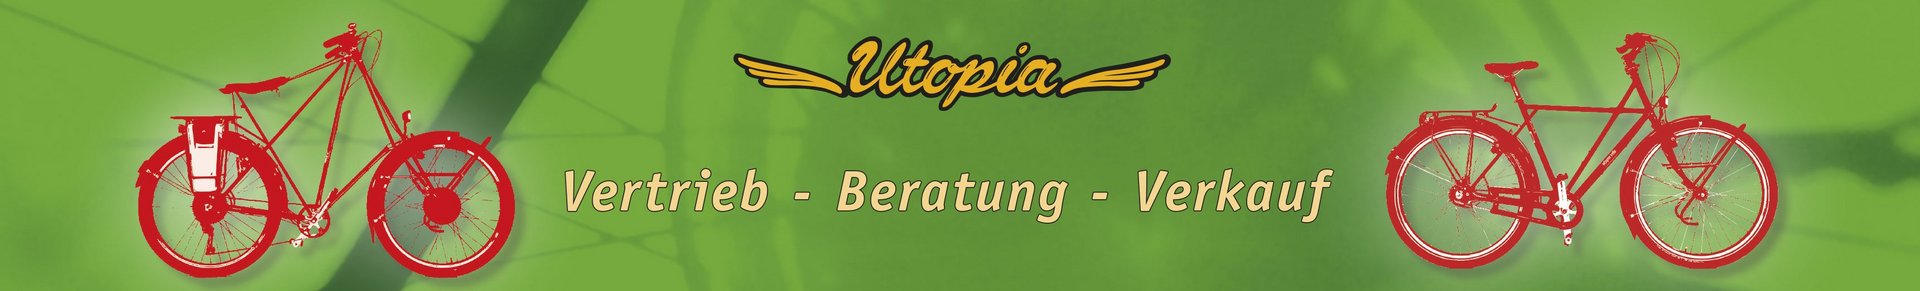 Utopia_Vertrieb_2